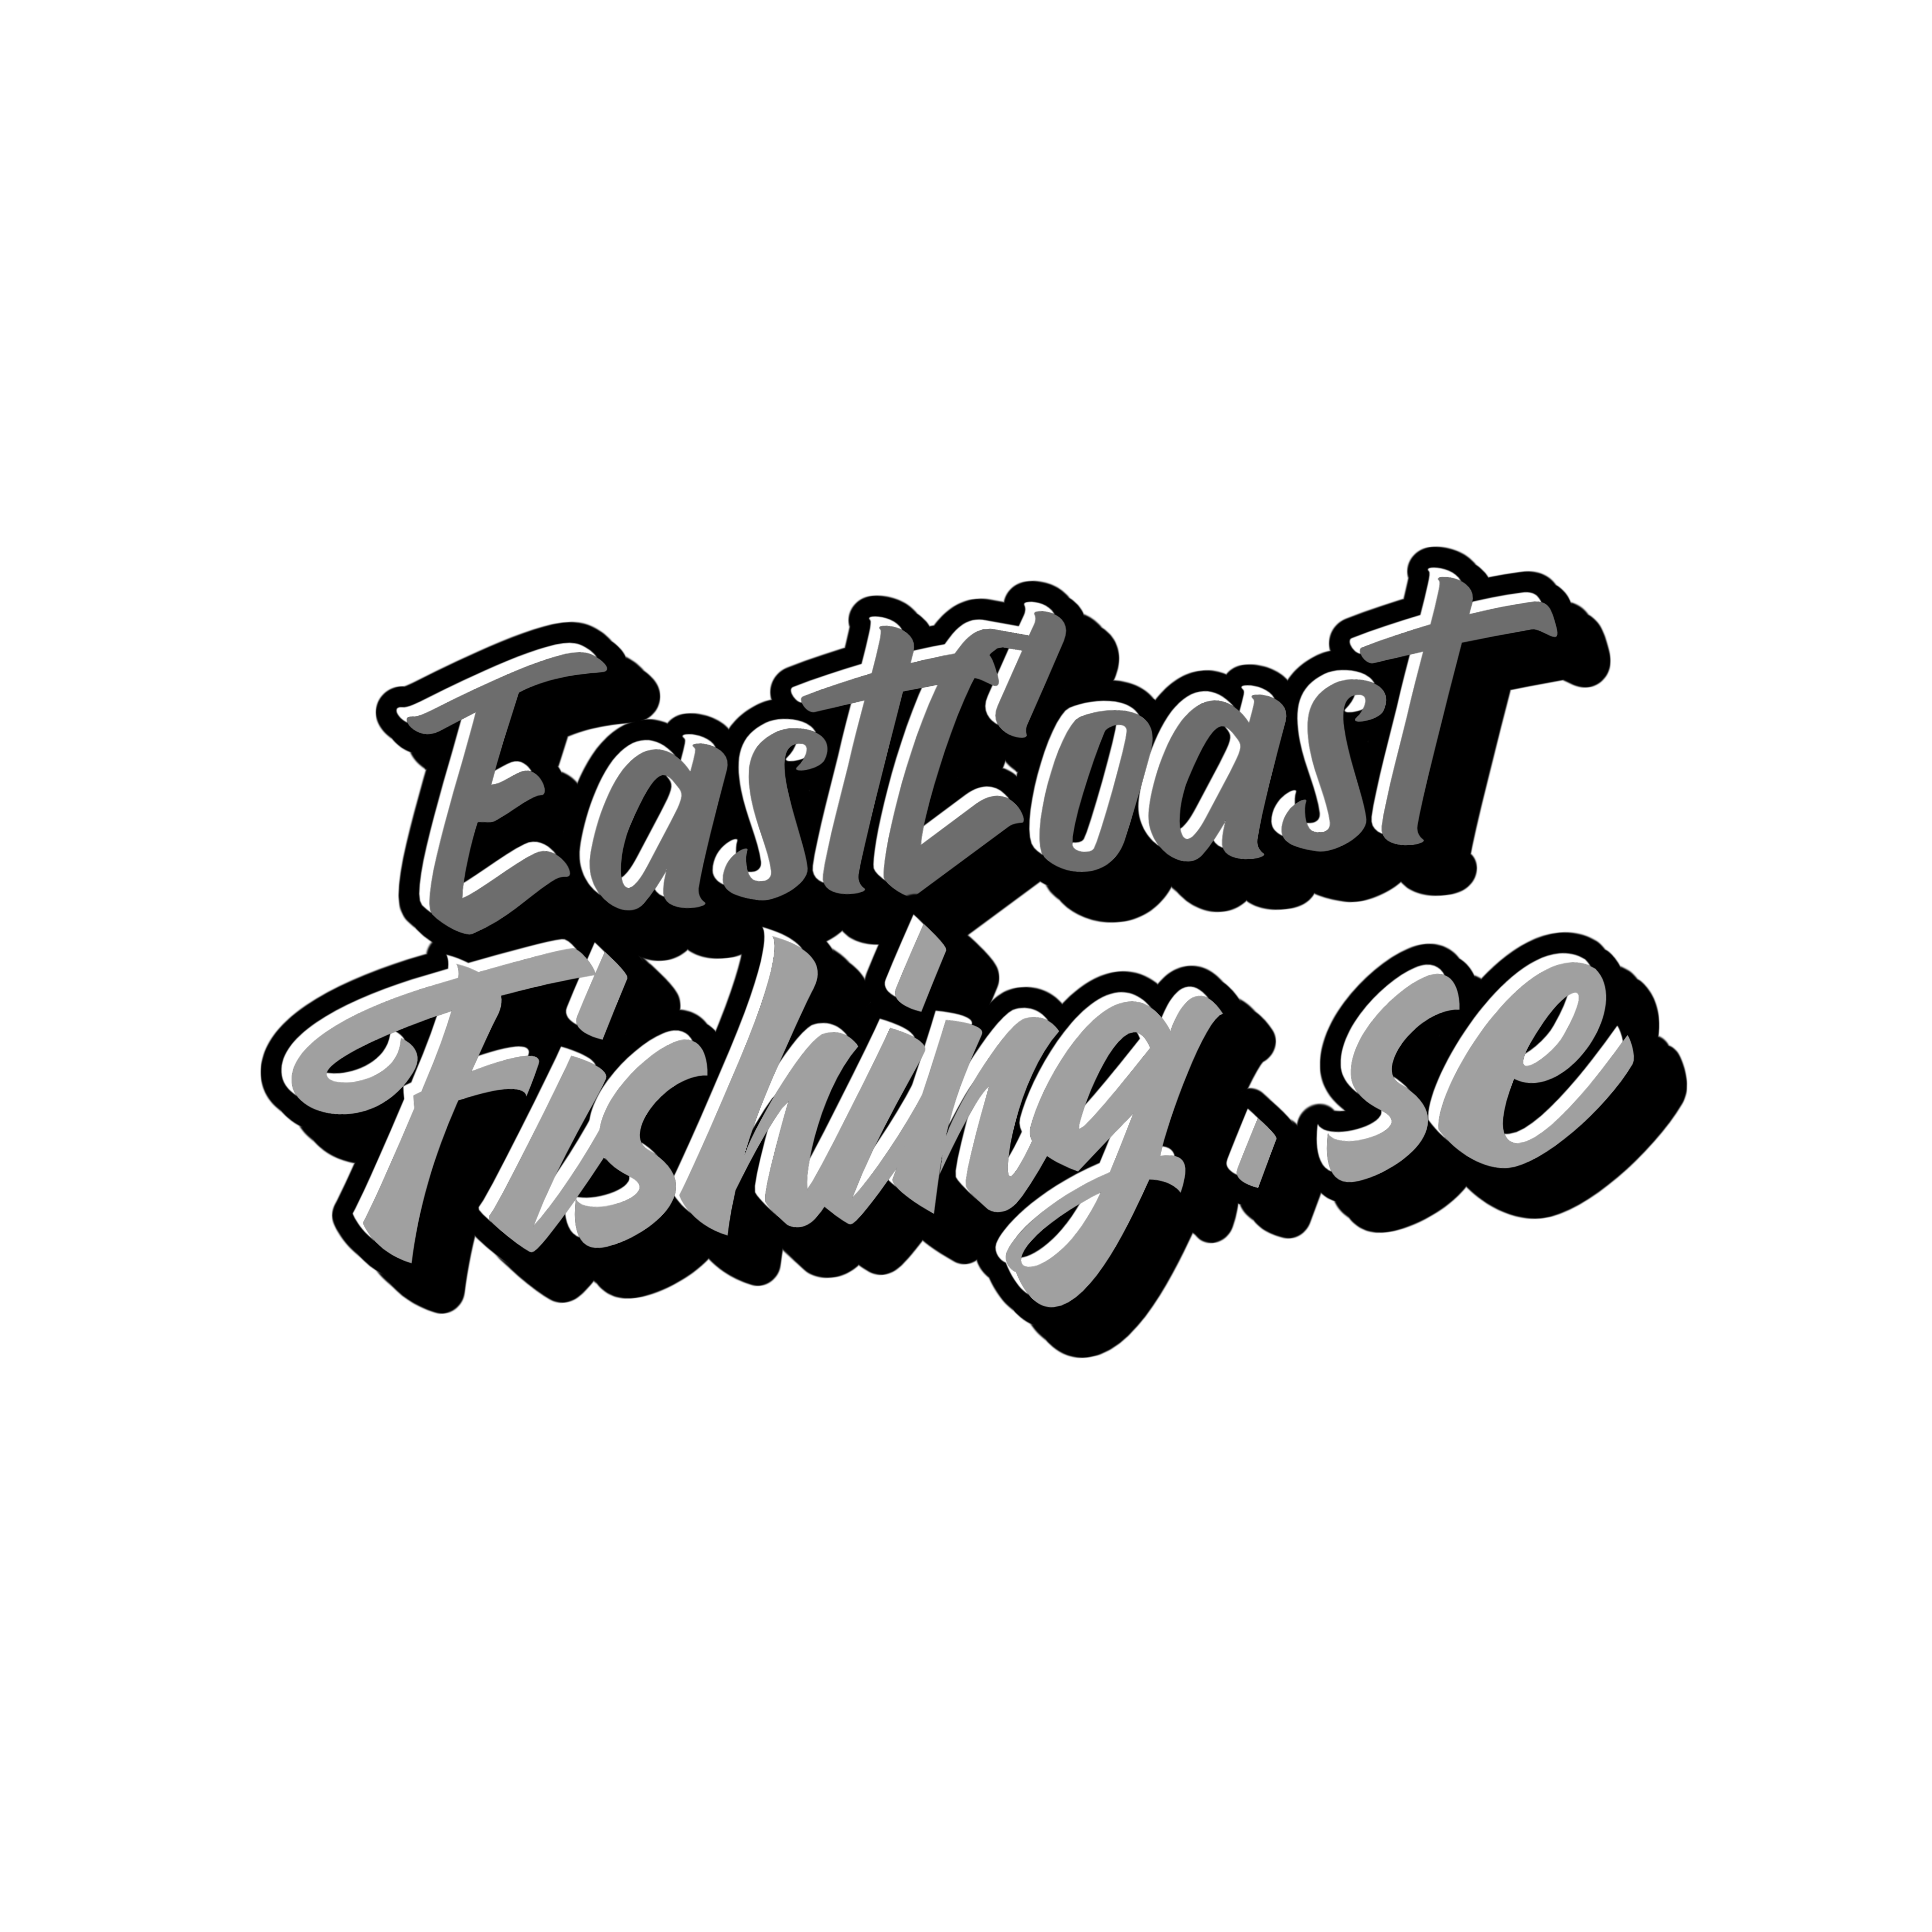 EastCoastFishing.se